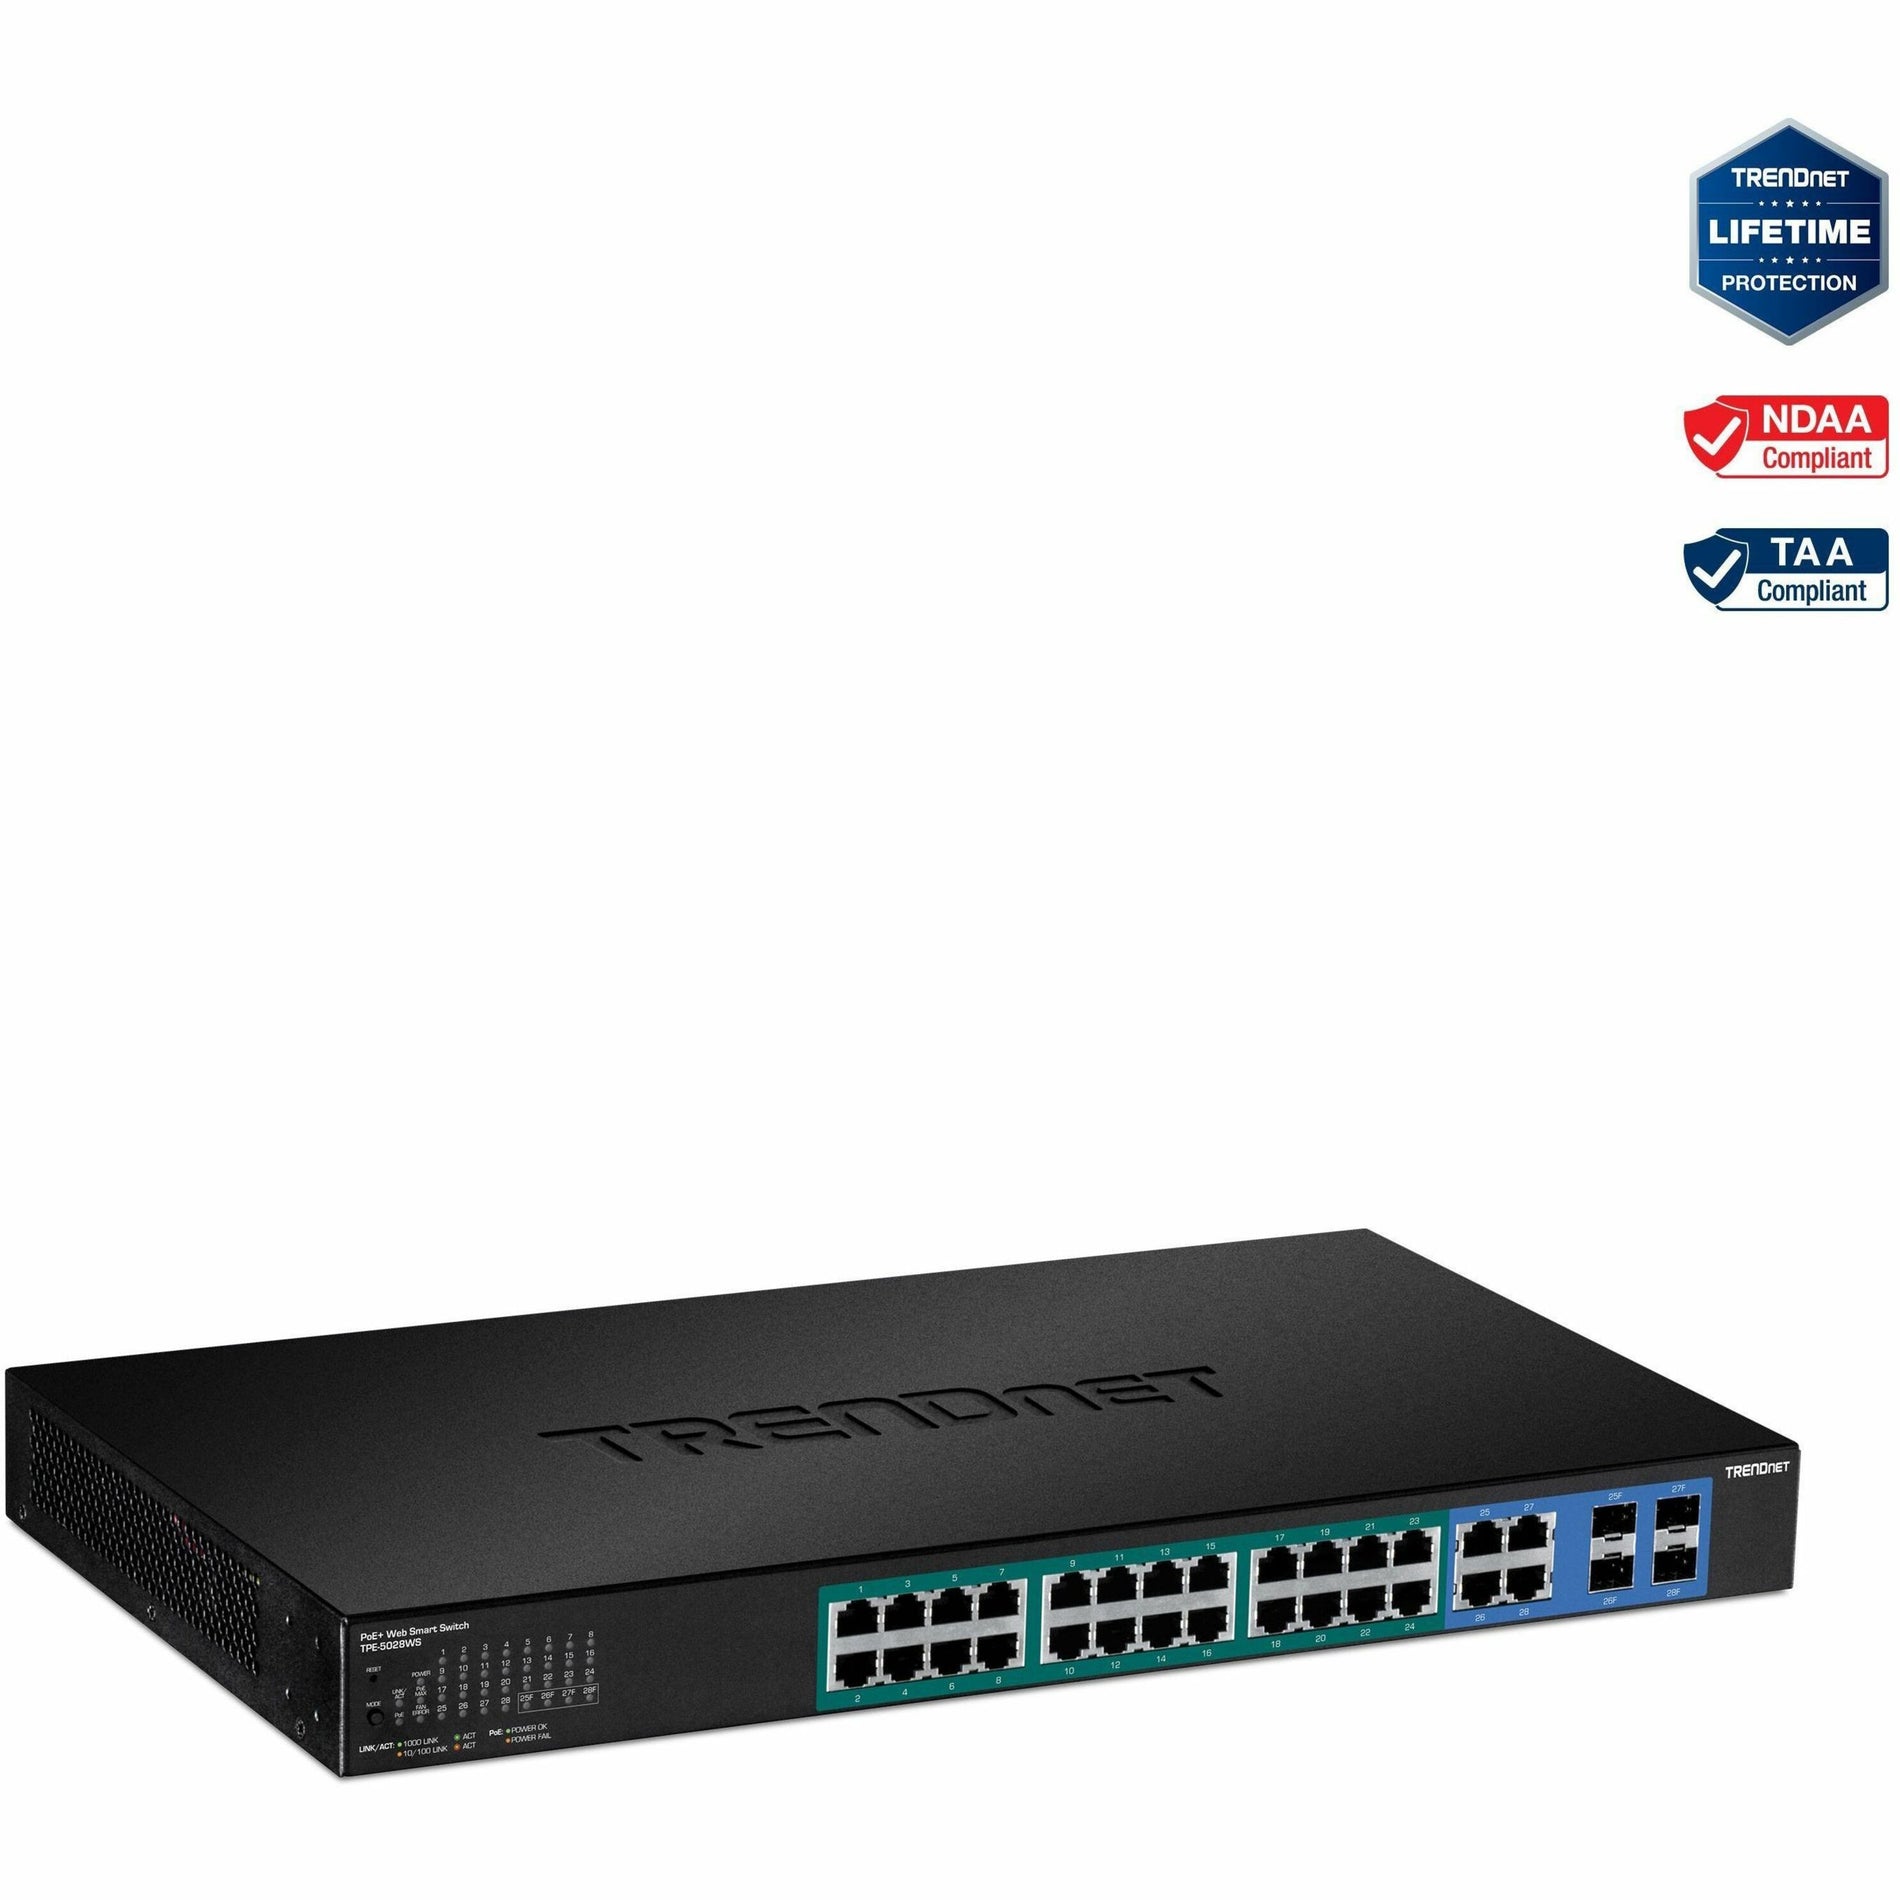 TRENDnet TPE-5028WS 28-Port Gigabit Web Smart PoE+ Switch (370W), VLAN, QoS, LACP, IPv6 Support